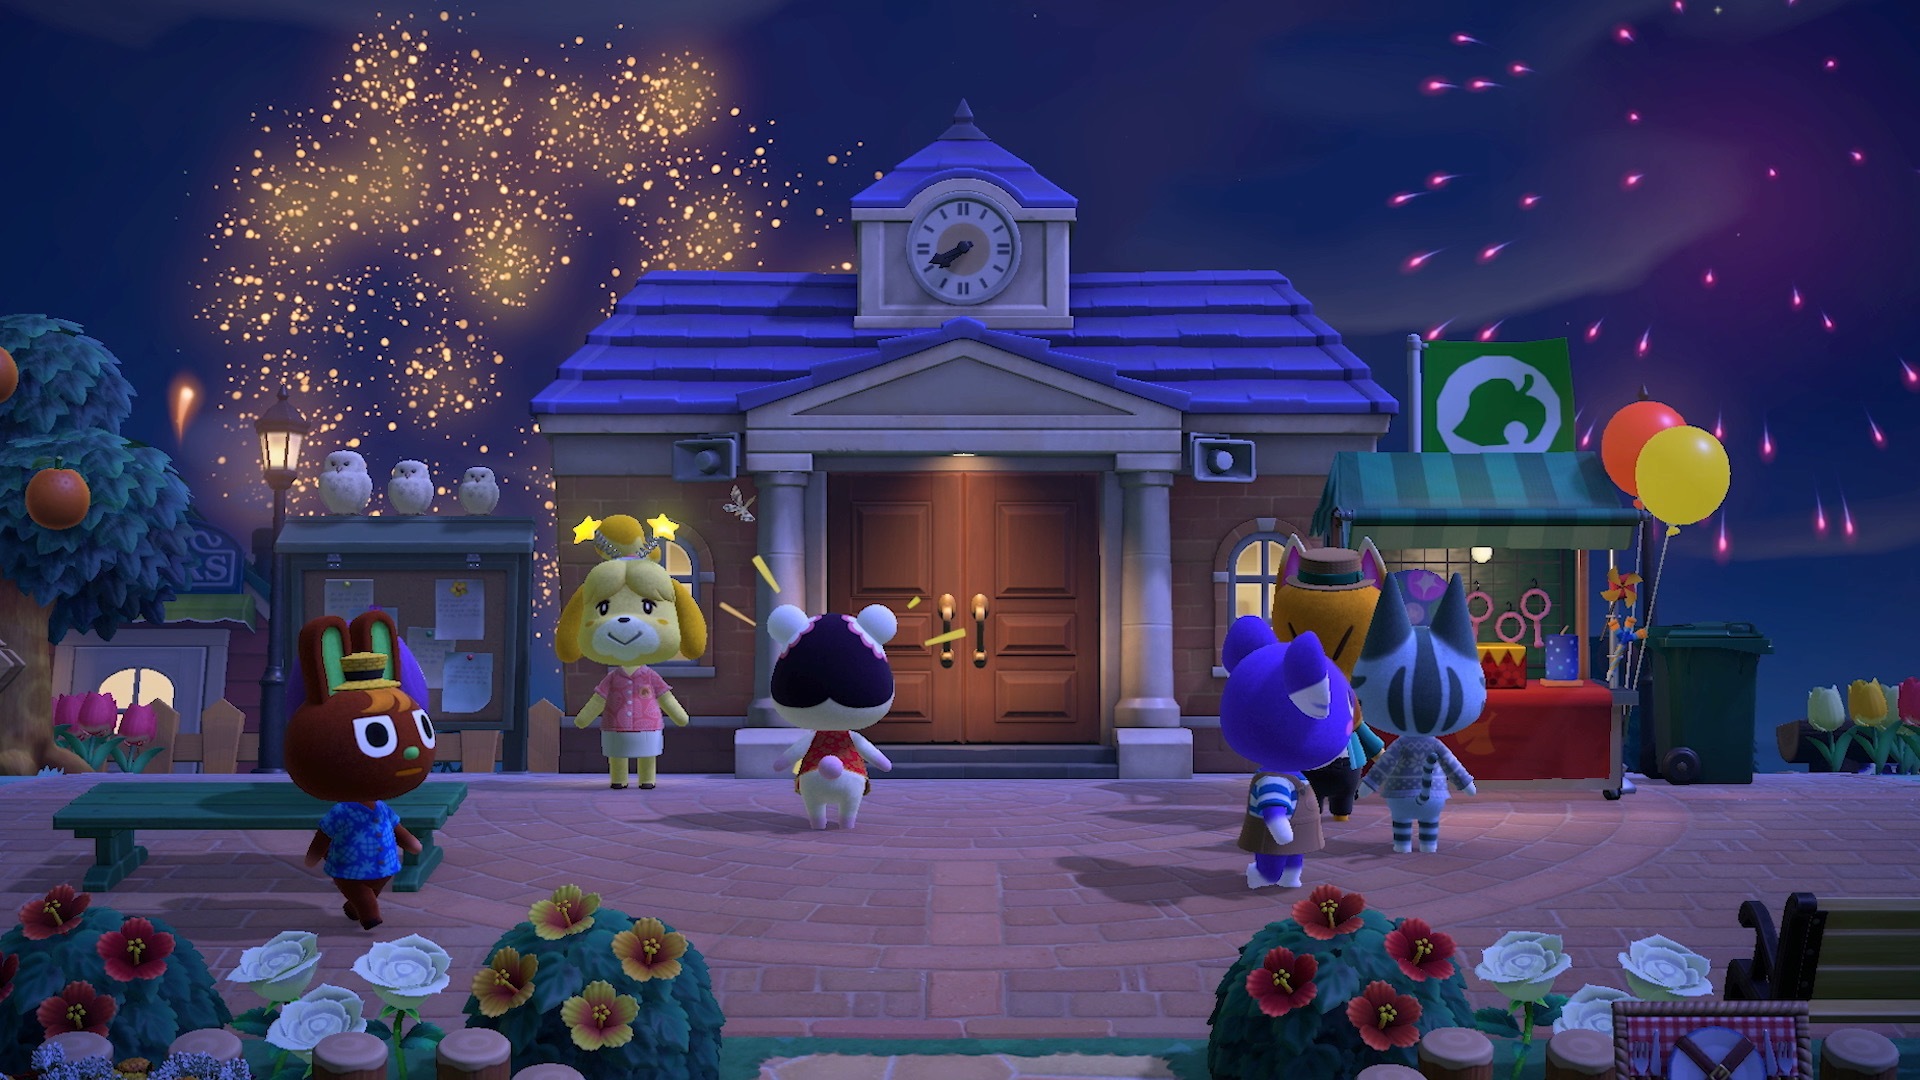 Nintendo ส่งอัปเดตใหม่ของ Animal Crossing: New Horizons ชมดอกไม้ไฟและเที่ยวเกาะคนอื่นในความฝัน